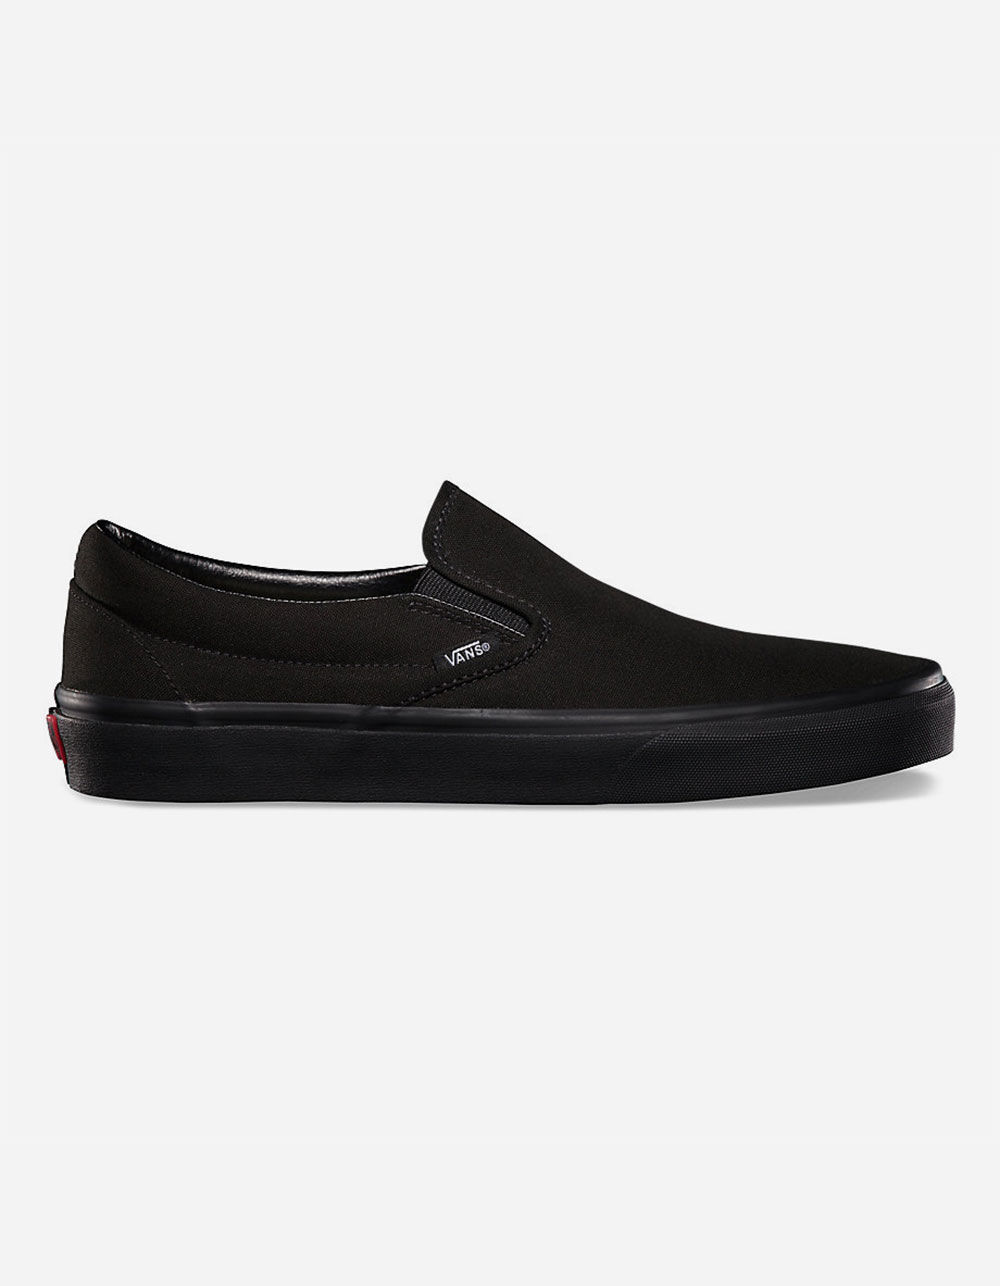 VANS Classic Slip-On Black & Black Shoes BLACK/BLACK | Tillys